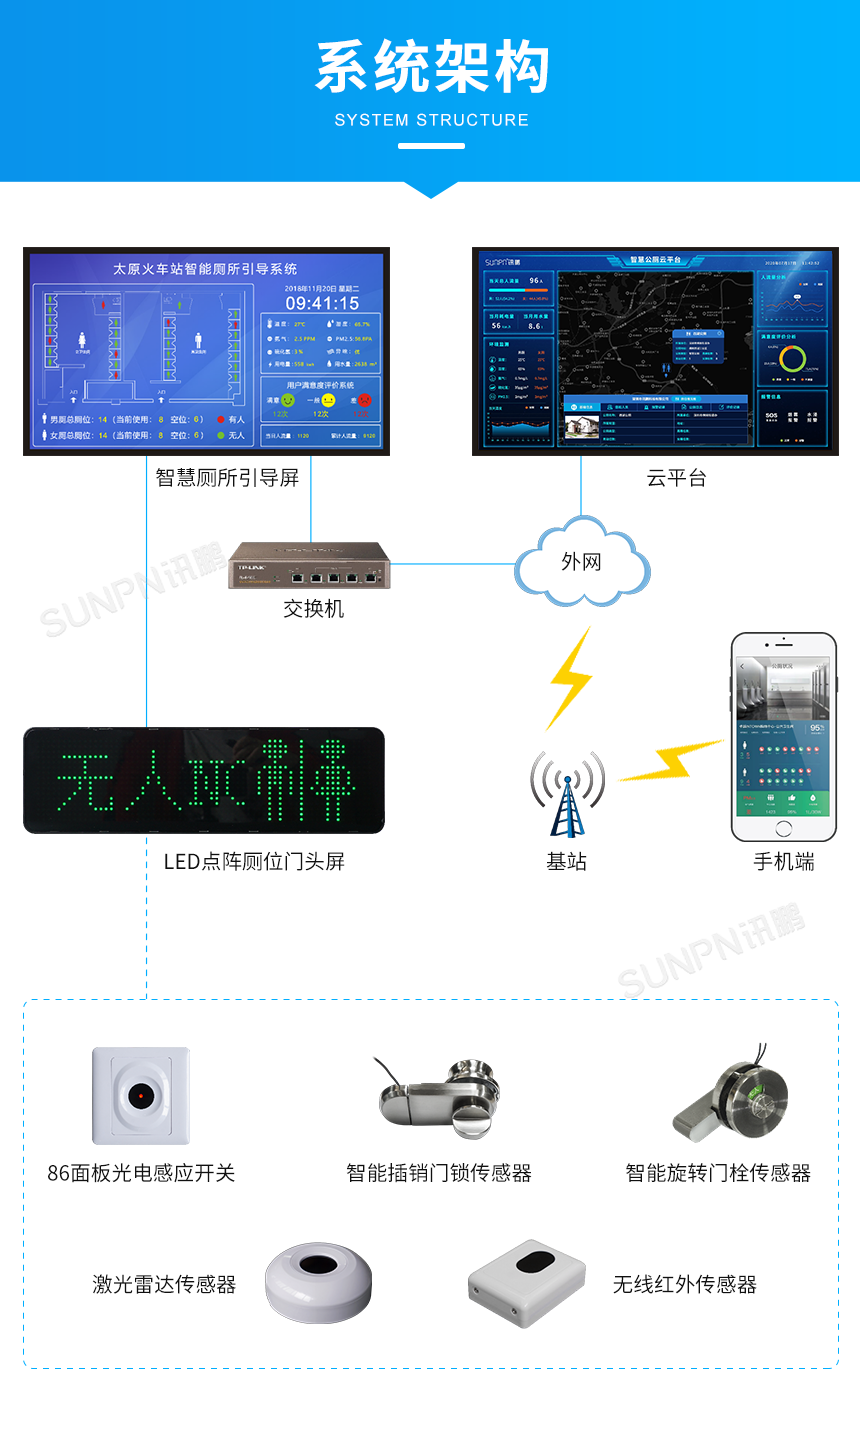 LED厕位计时状态屏-系统架构